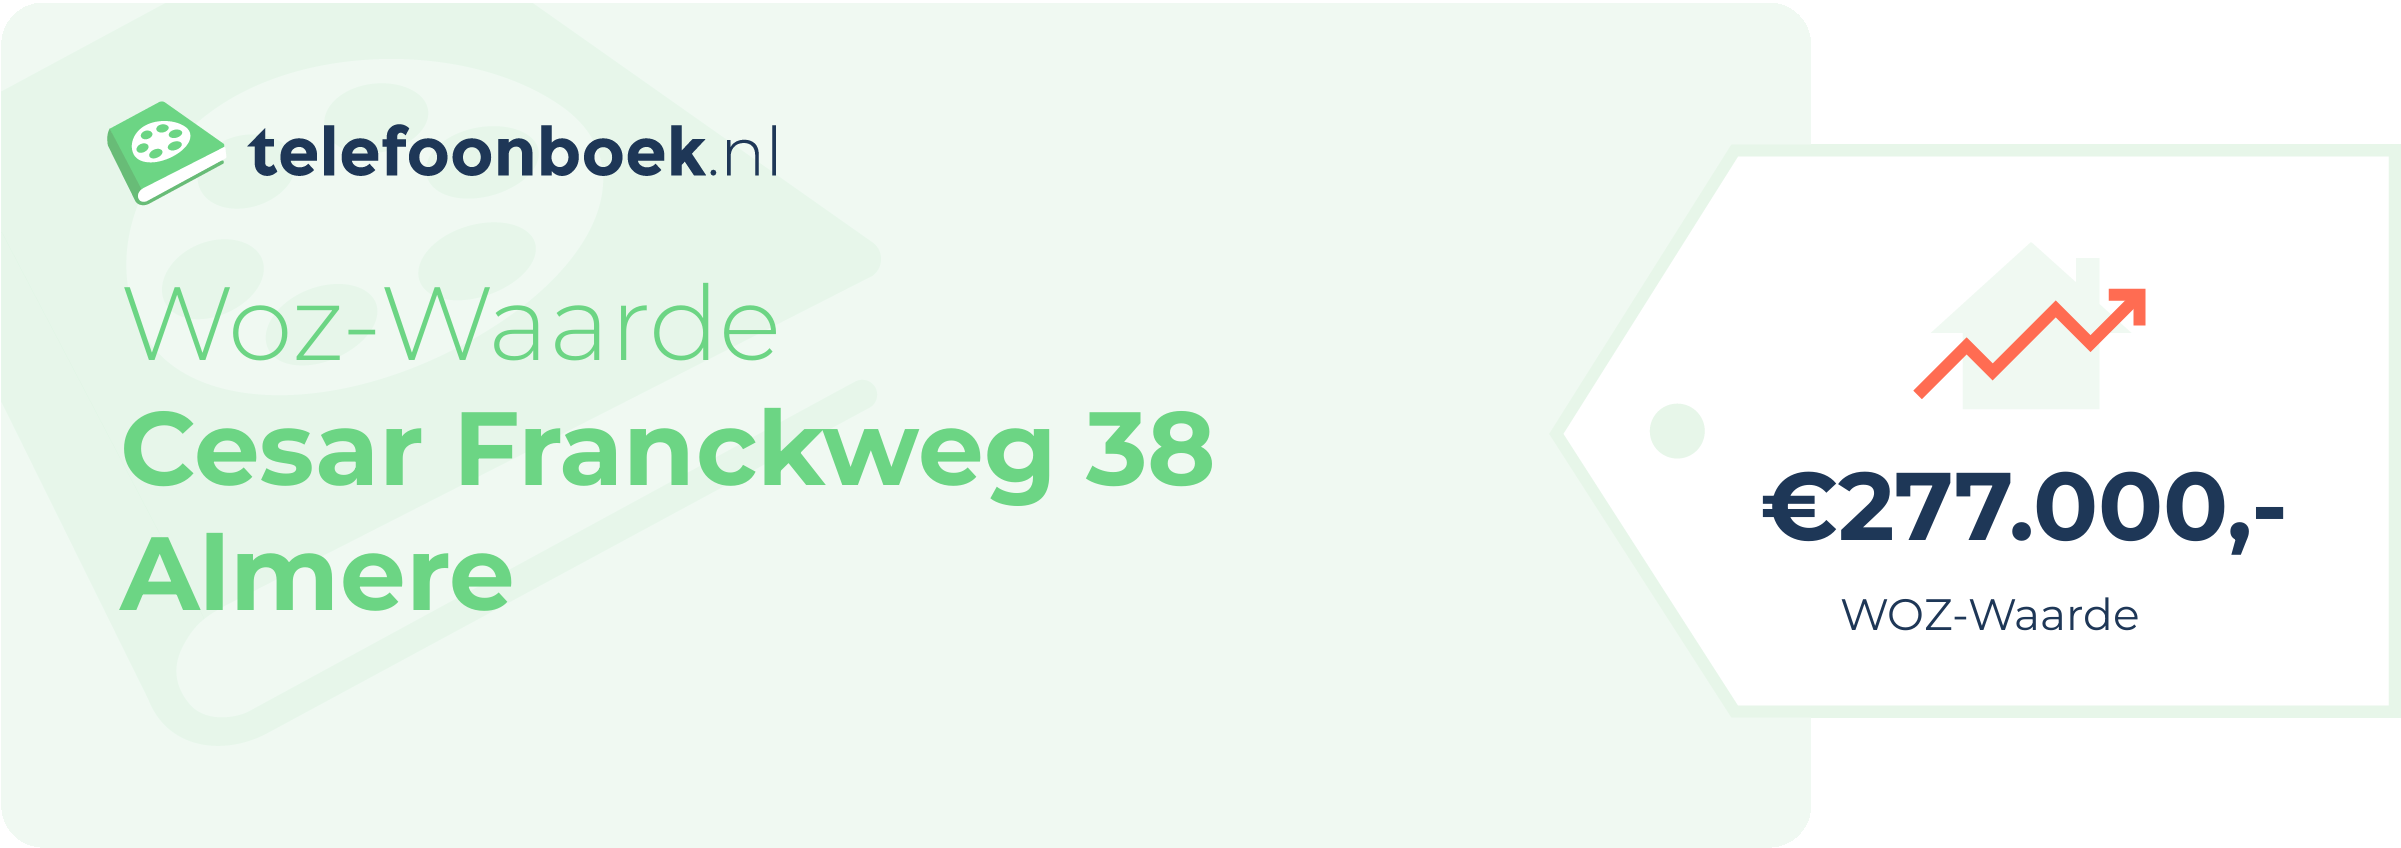 WOZ-waarde Cesar Franckweg 38 Almere